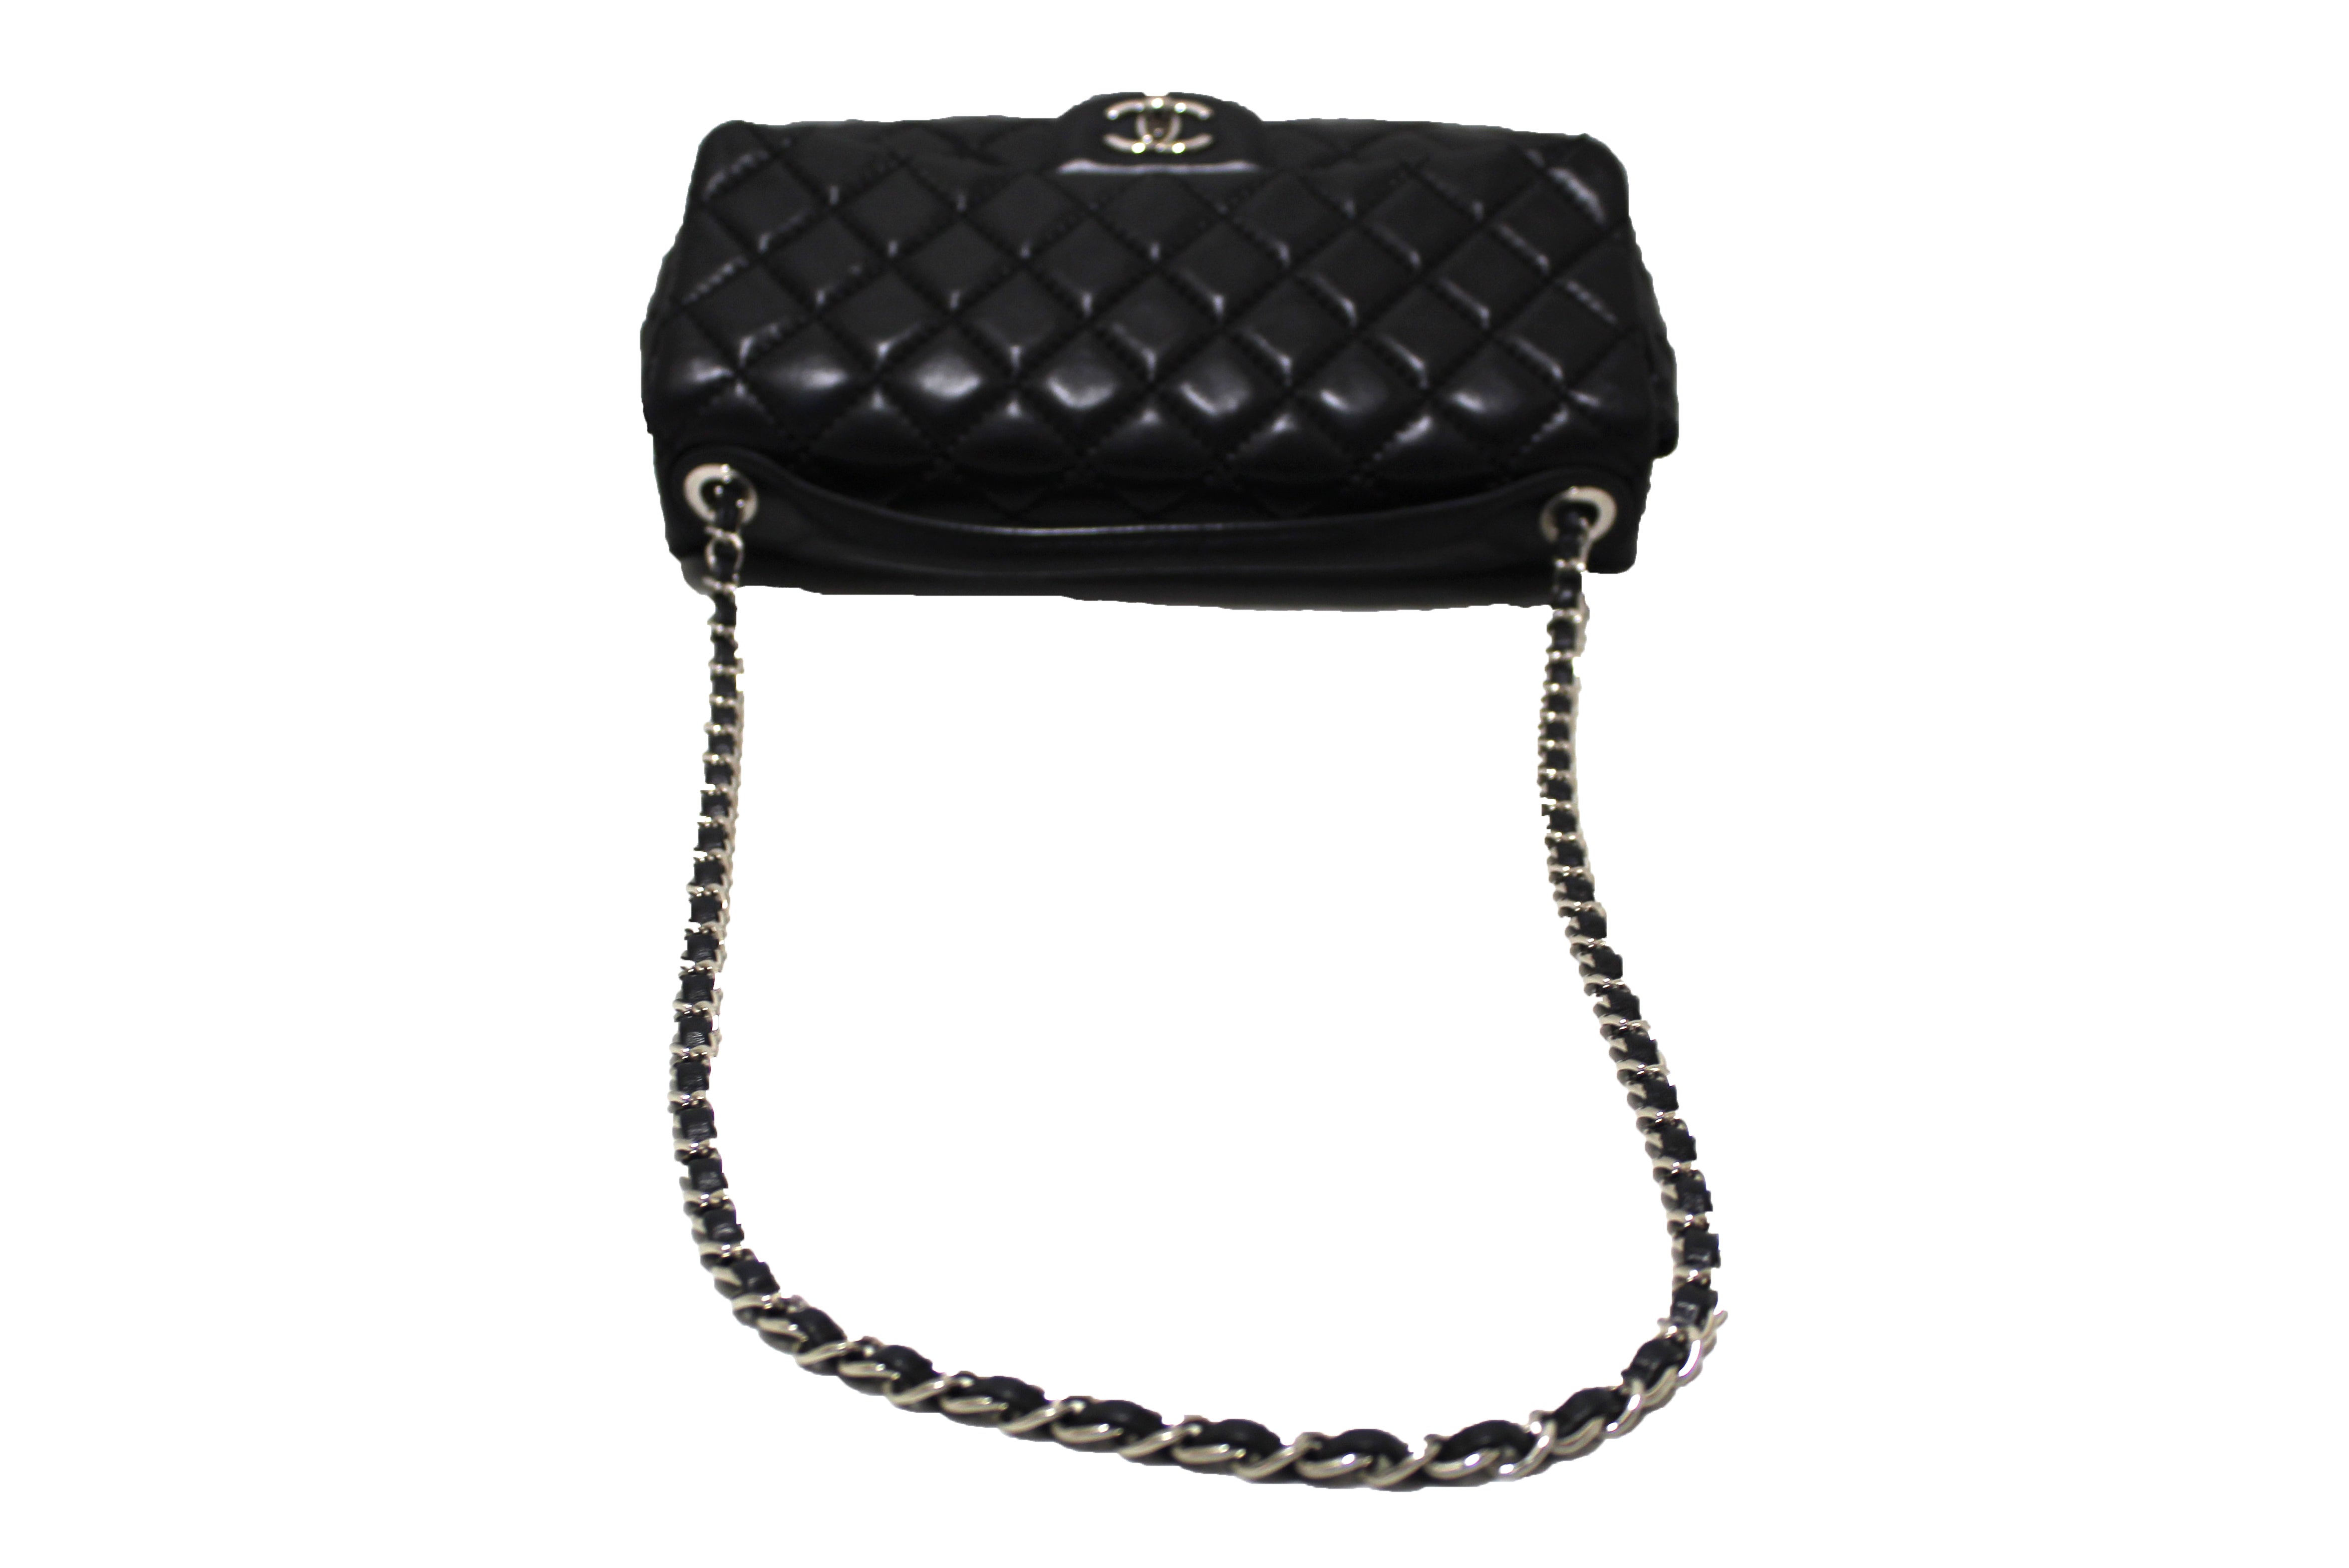 CHANEL Caviar Shoulder Bag White Bags & Handbags for Women for sale